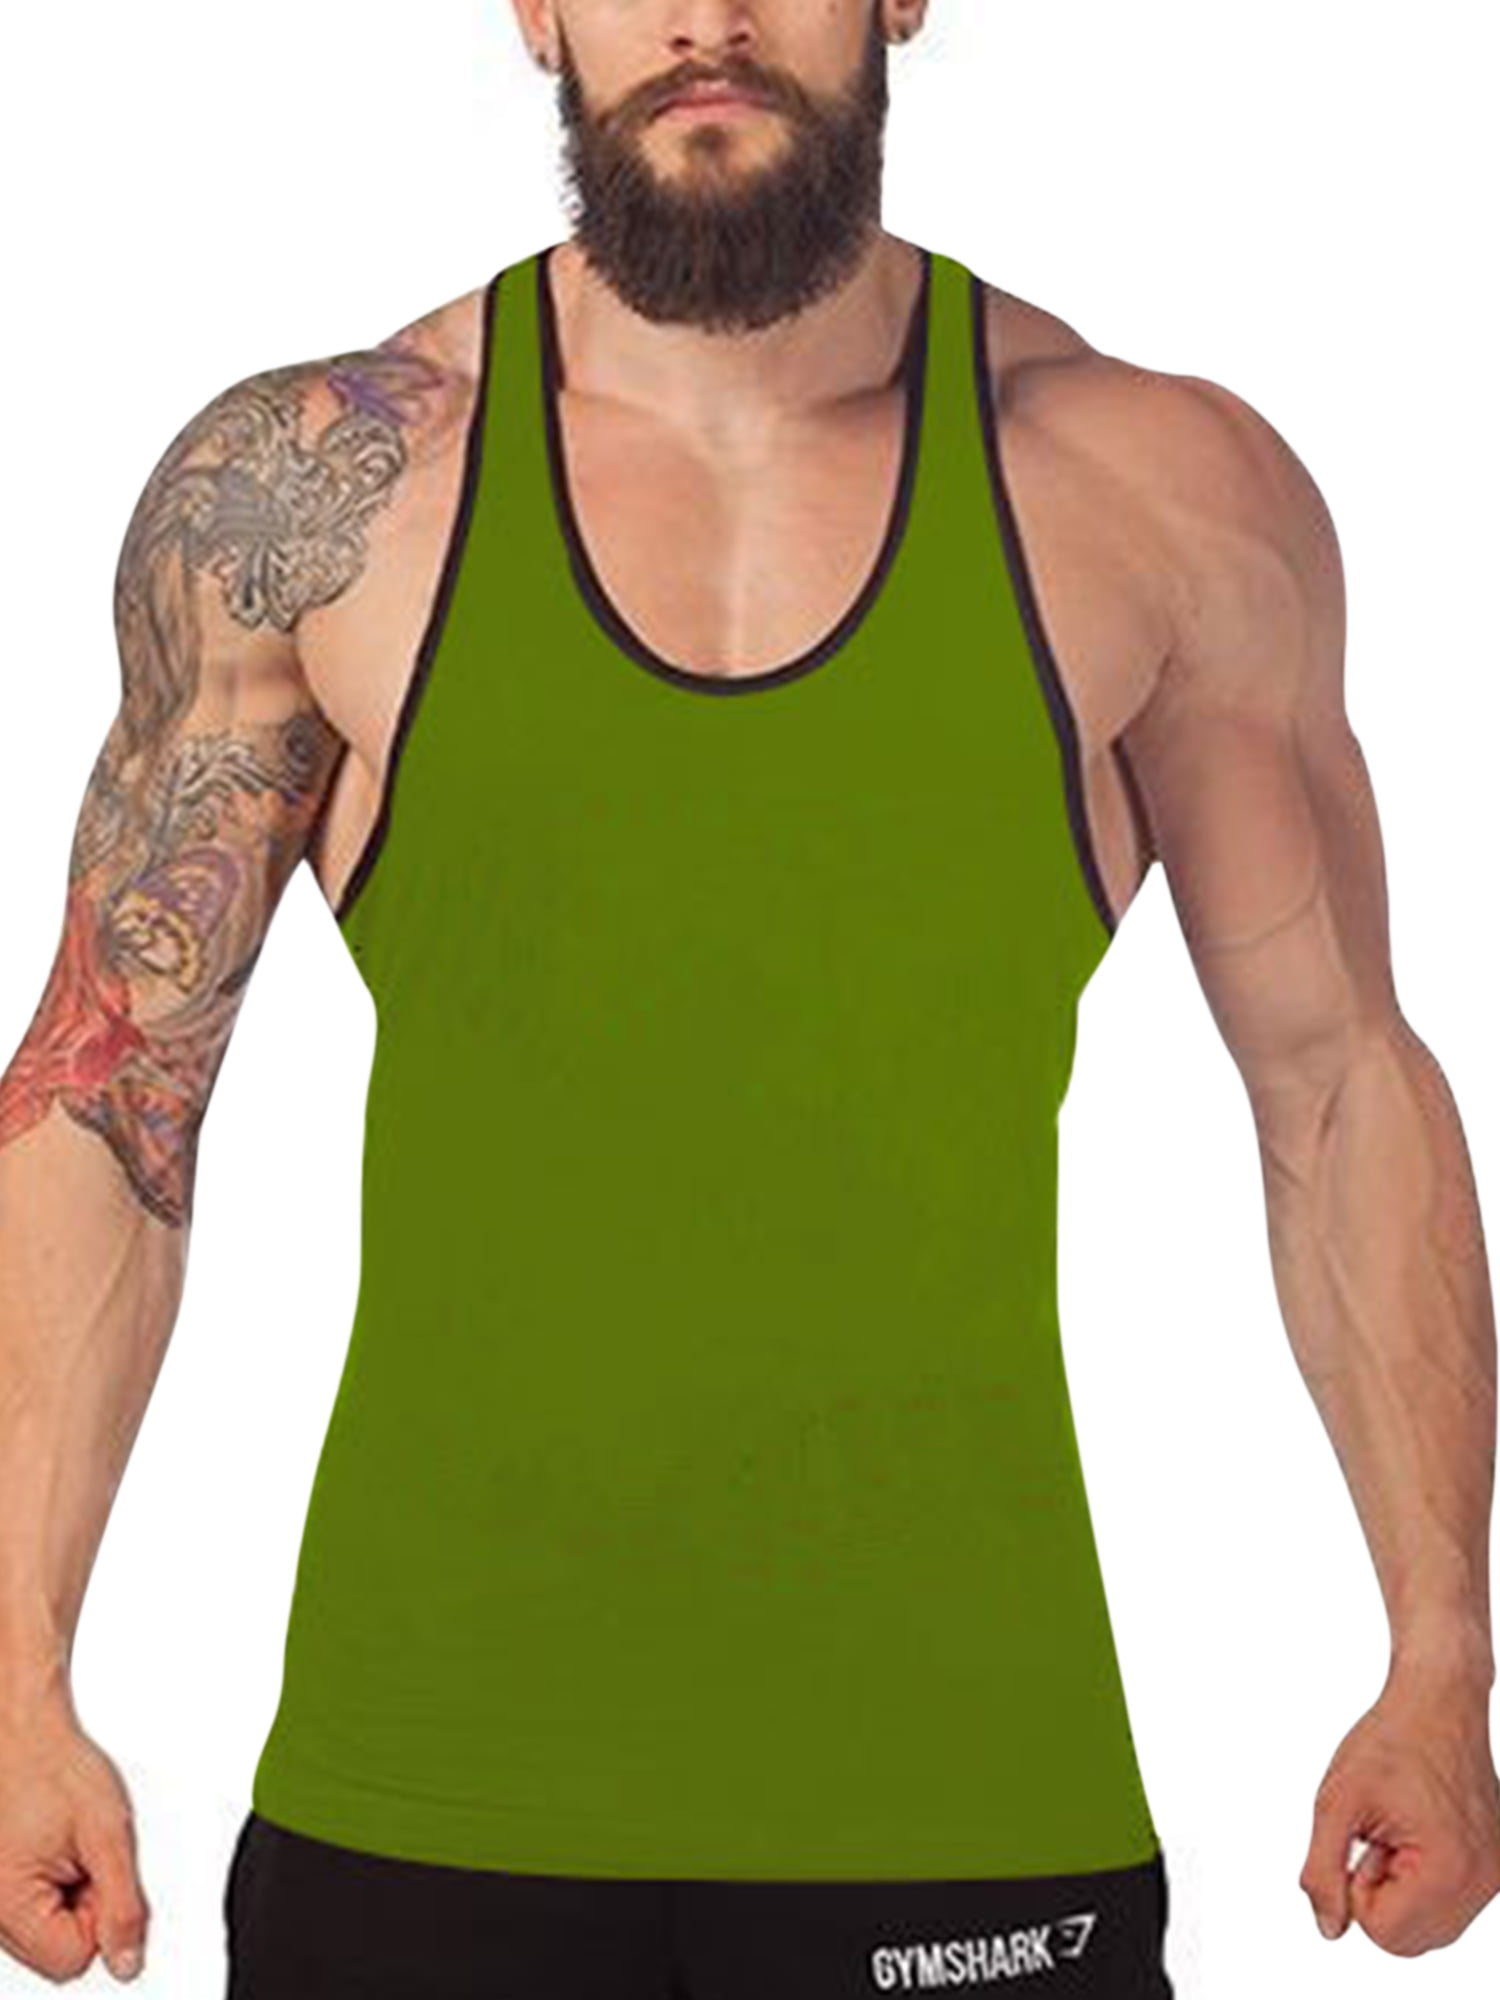 Mens Vest Athletic Tank Tops Sleeveless T Shirt Cotton Undershirt Tank top Training